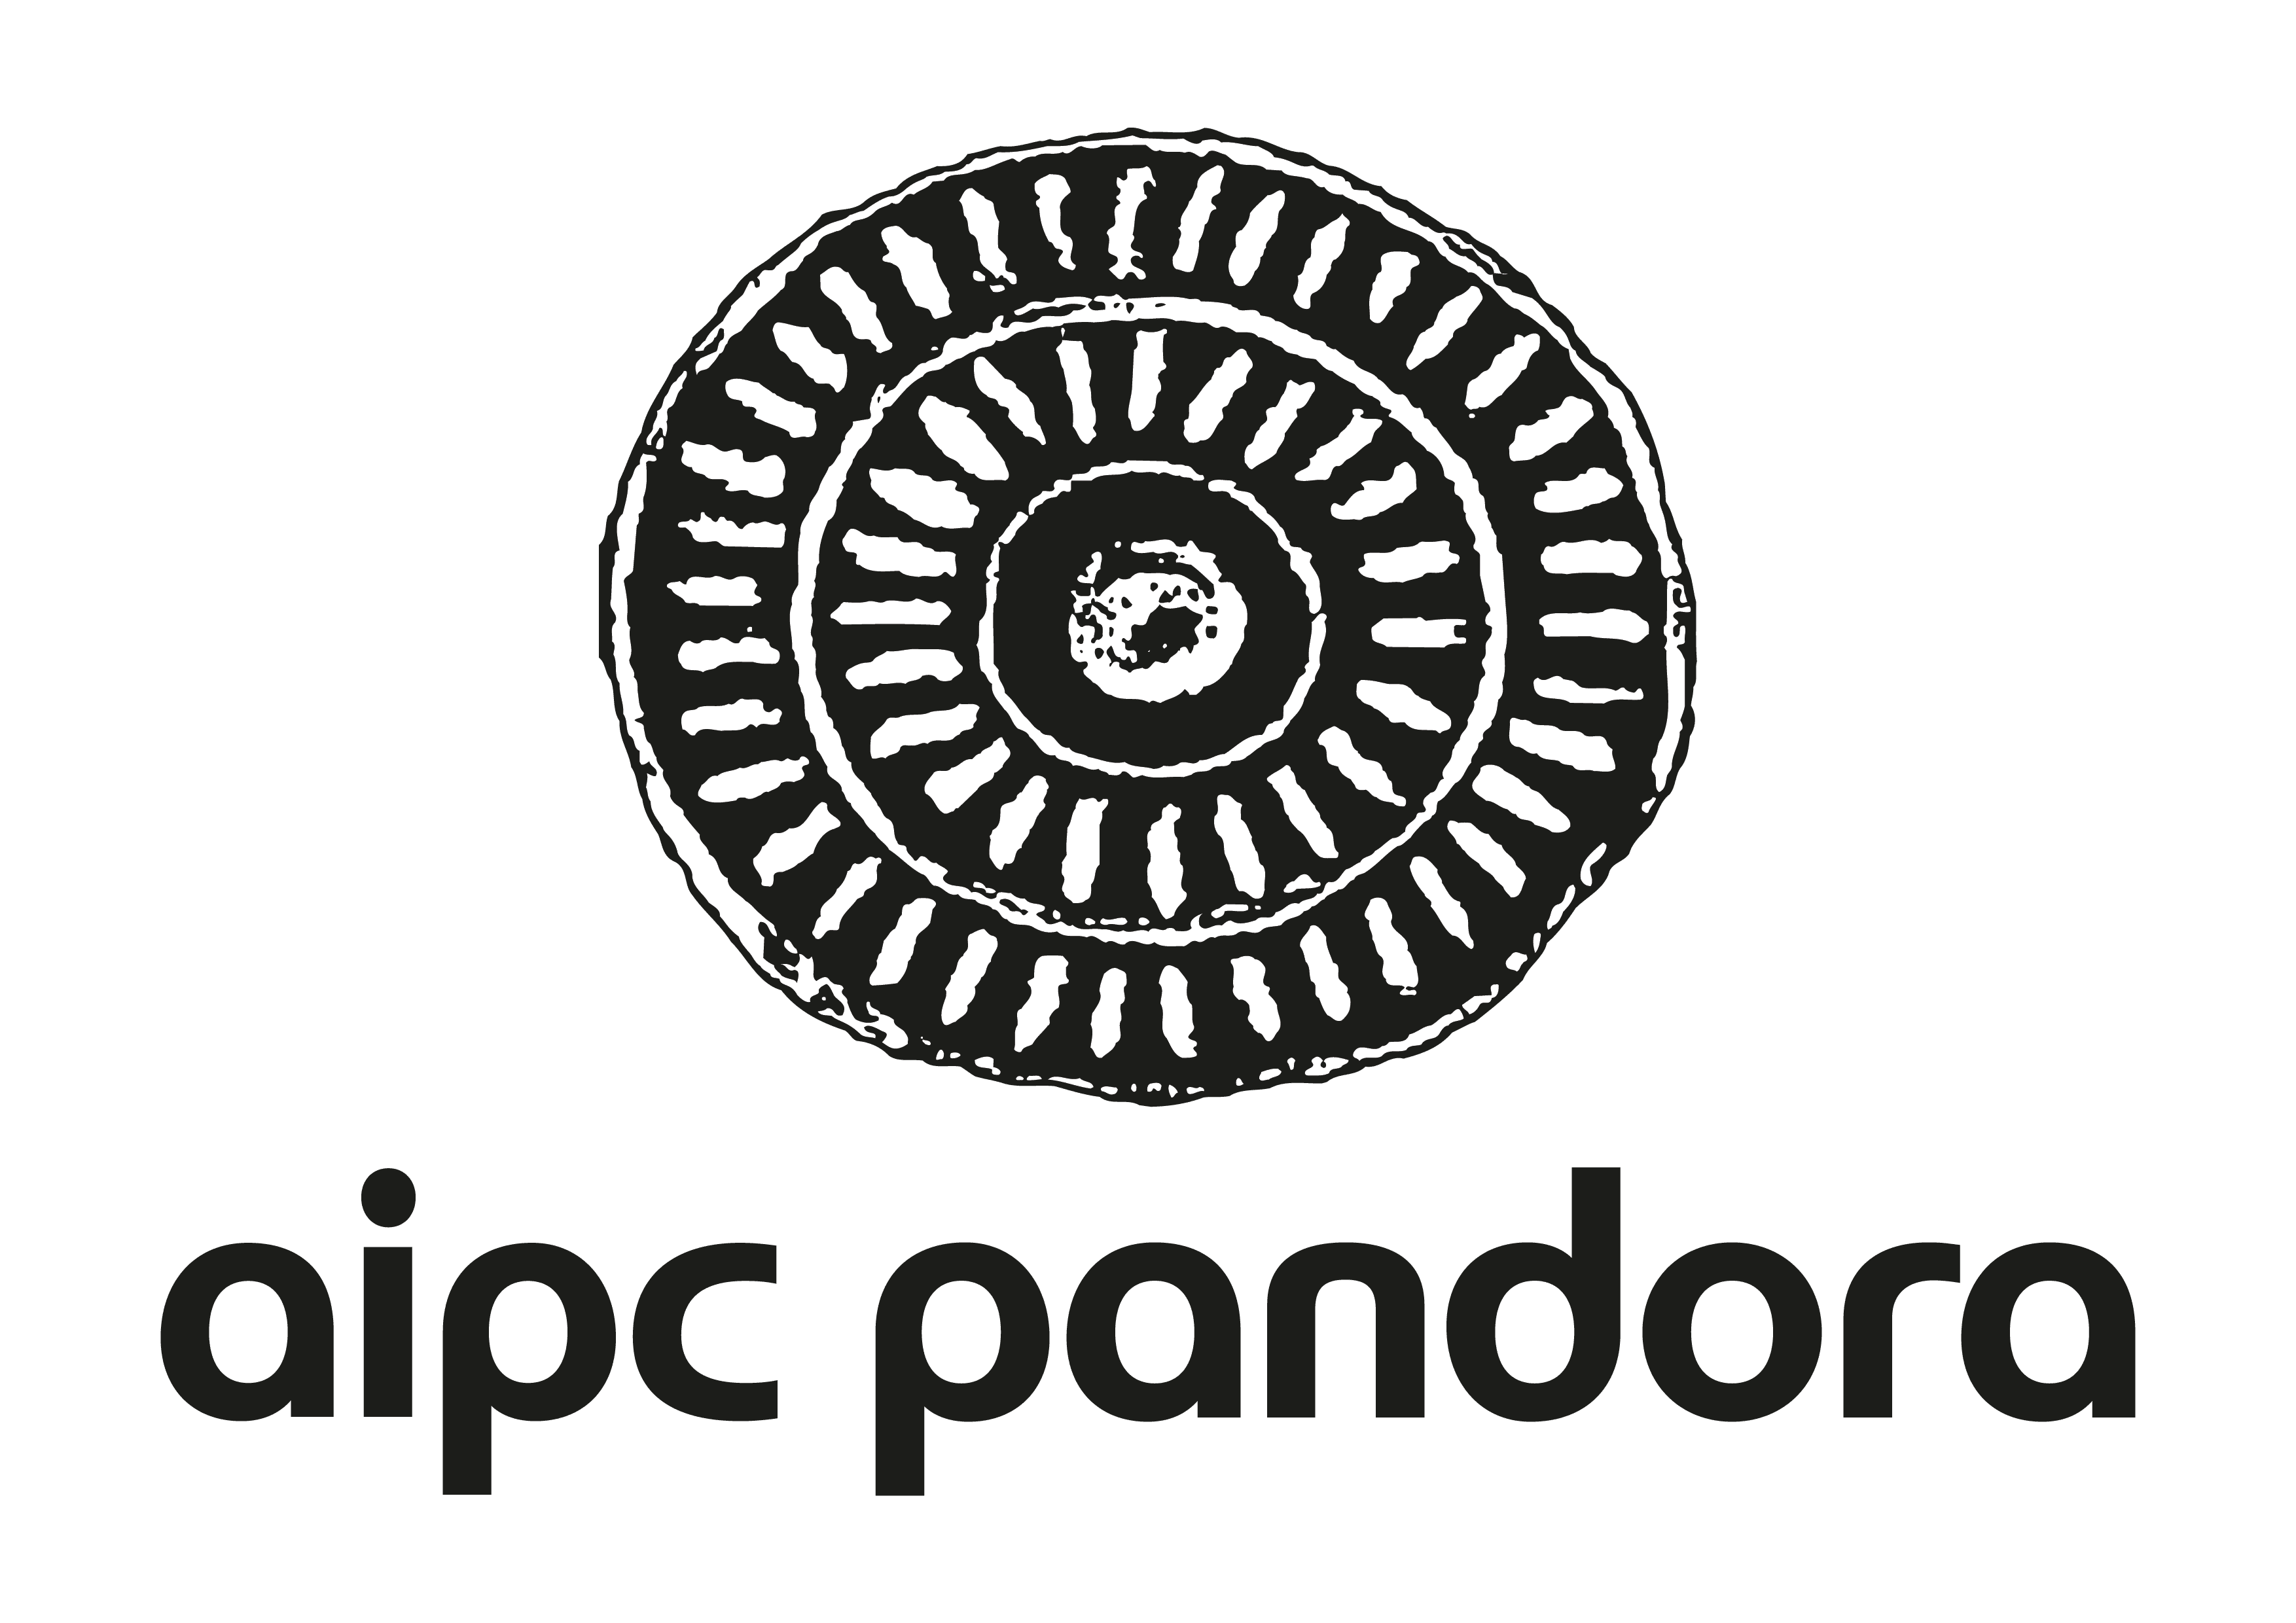 AIPC-Pandora-logo-vert-01